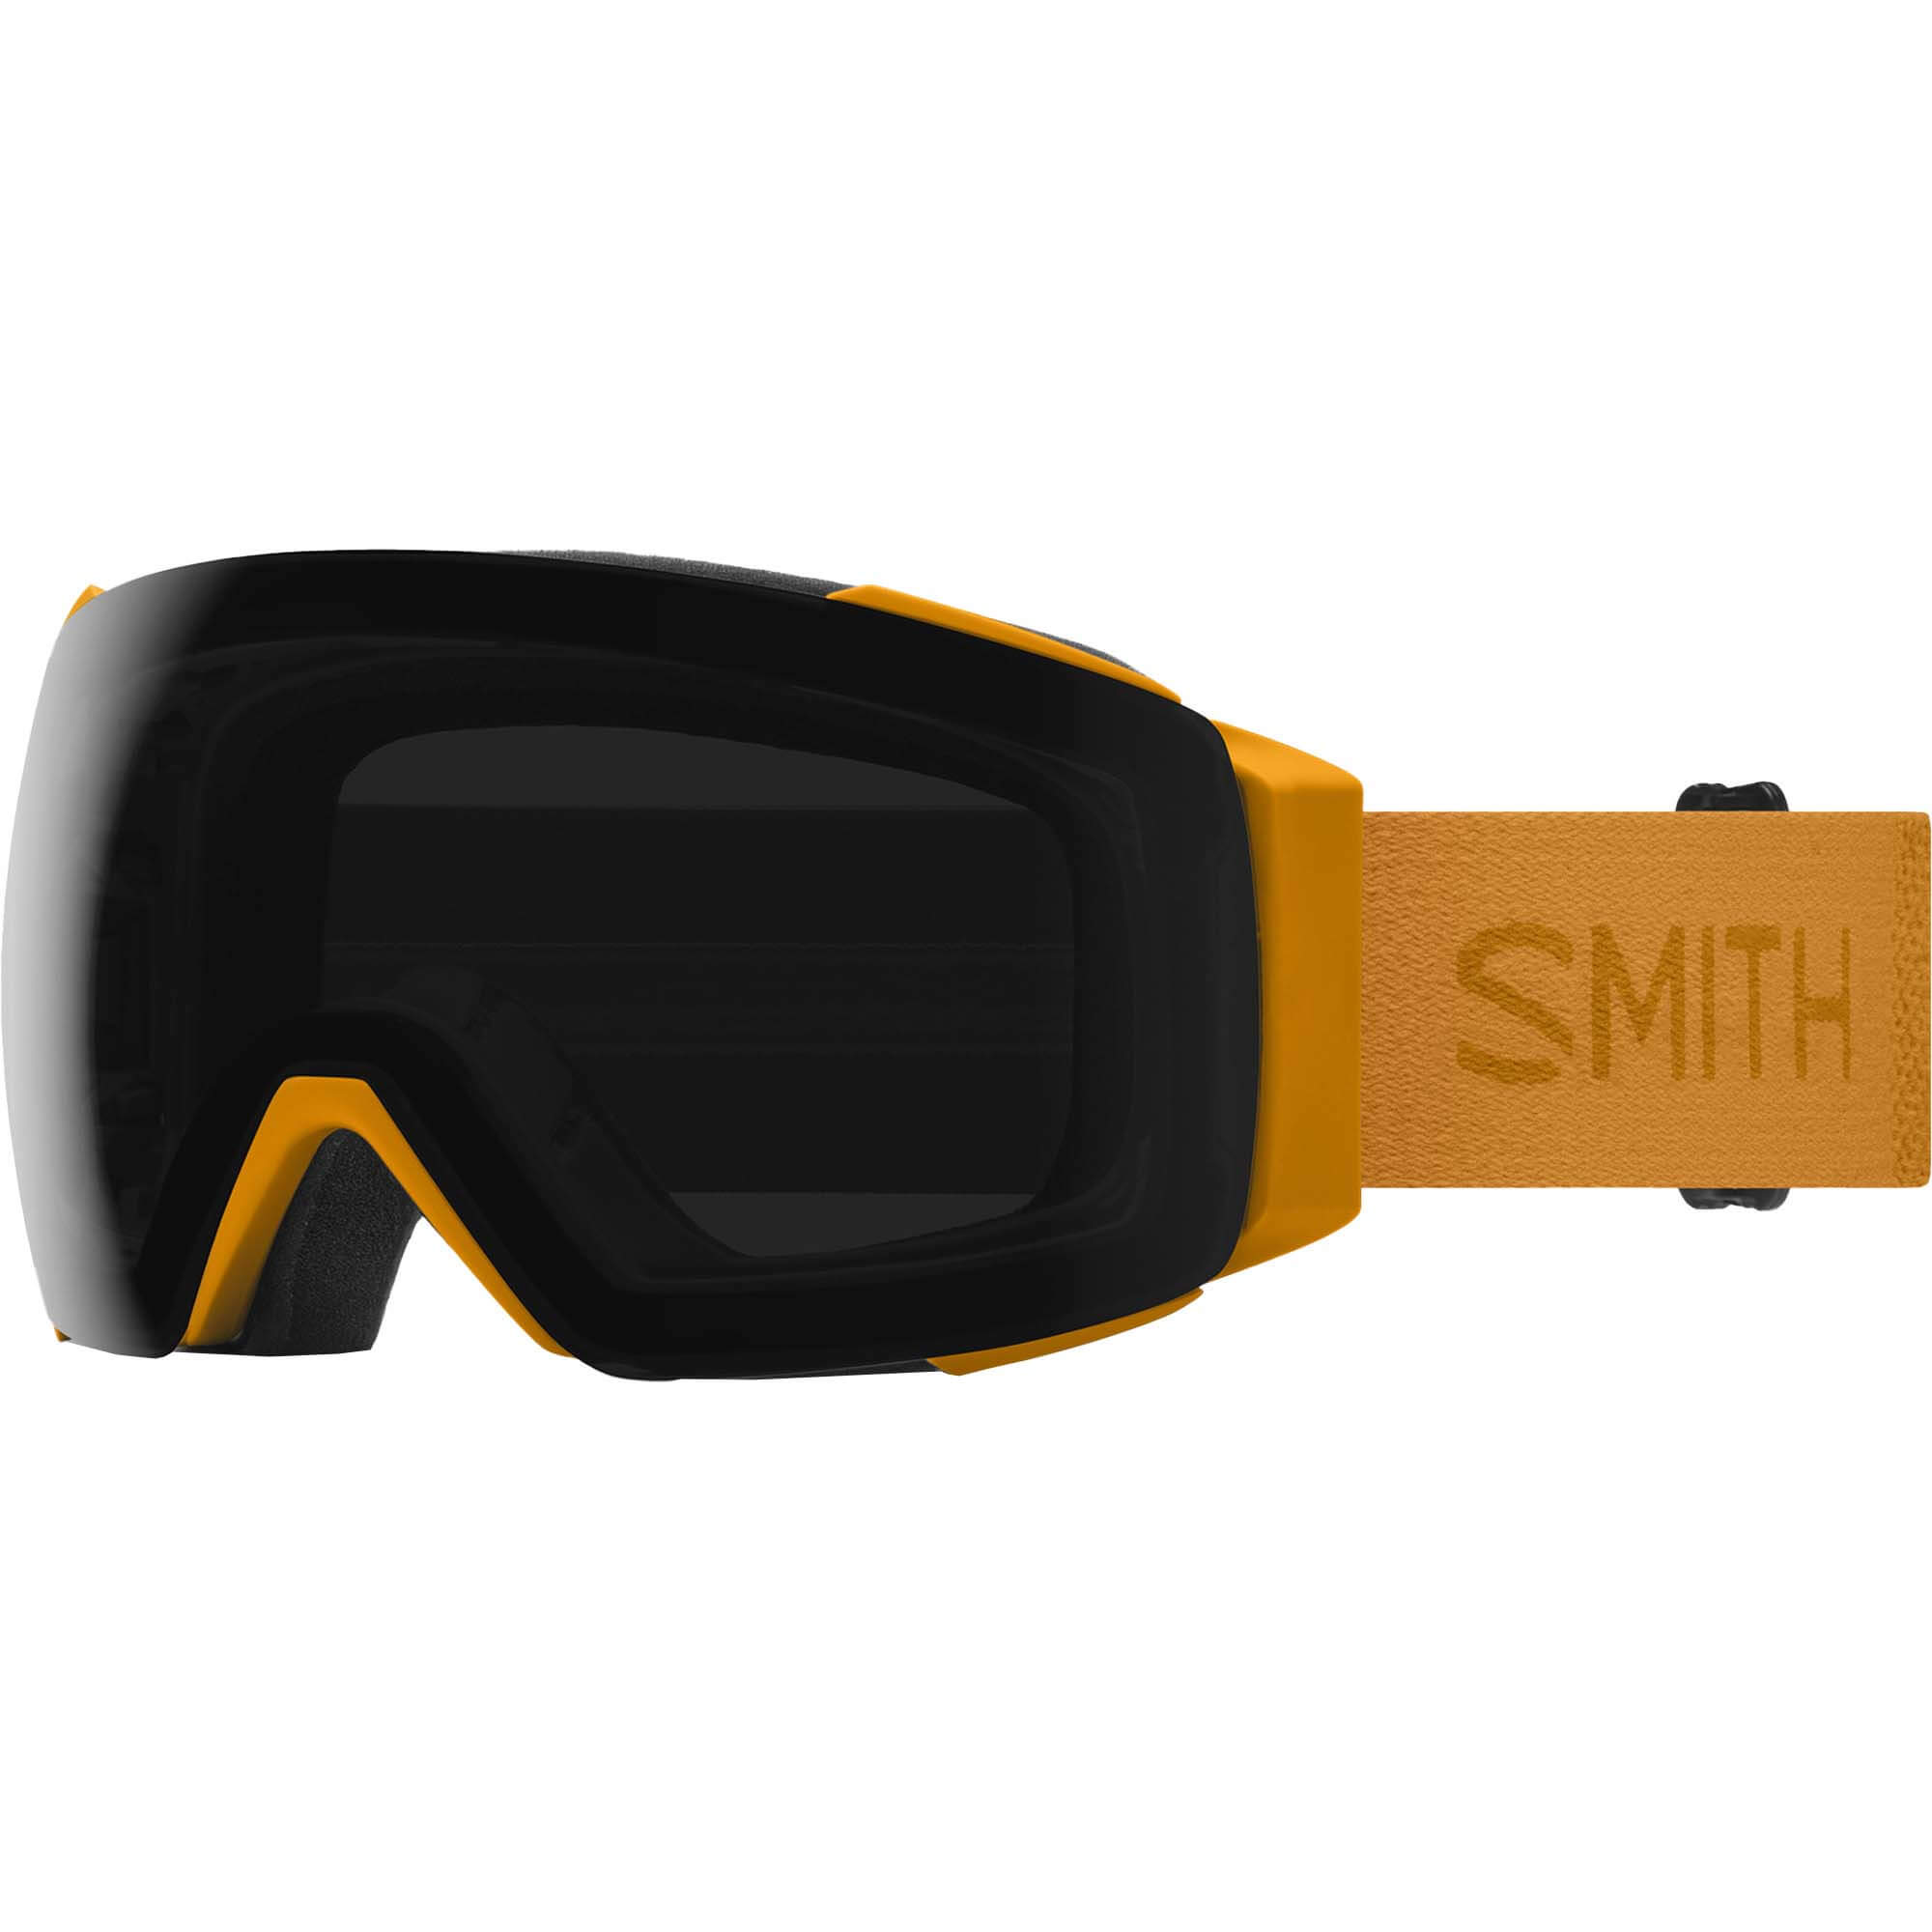 Smith I/O MAG Snowboard/Ski Goggles